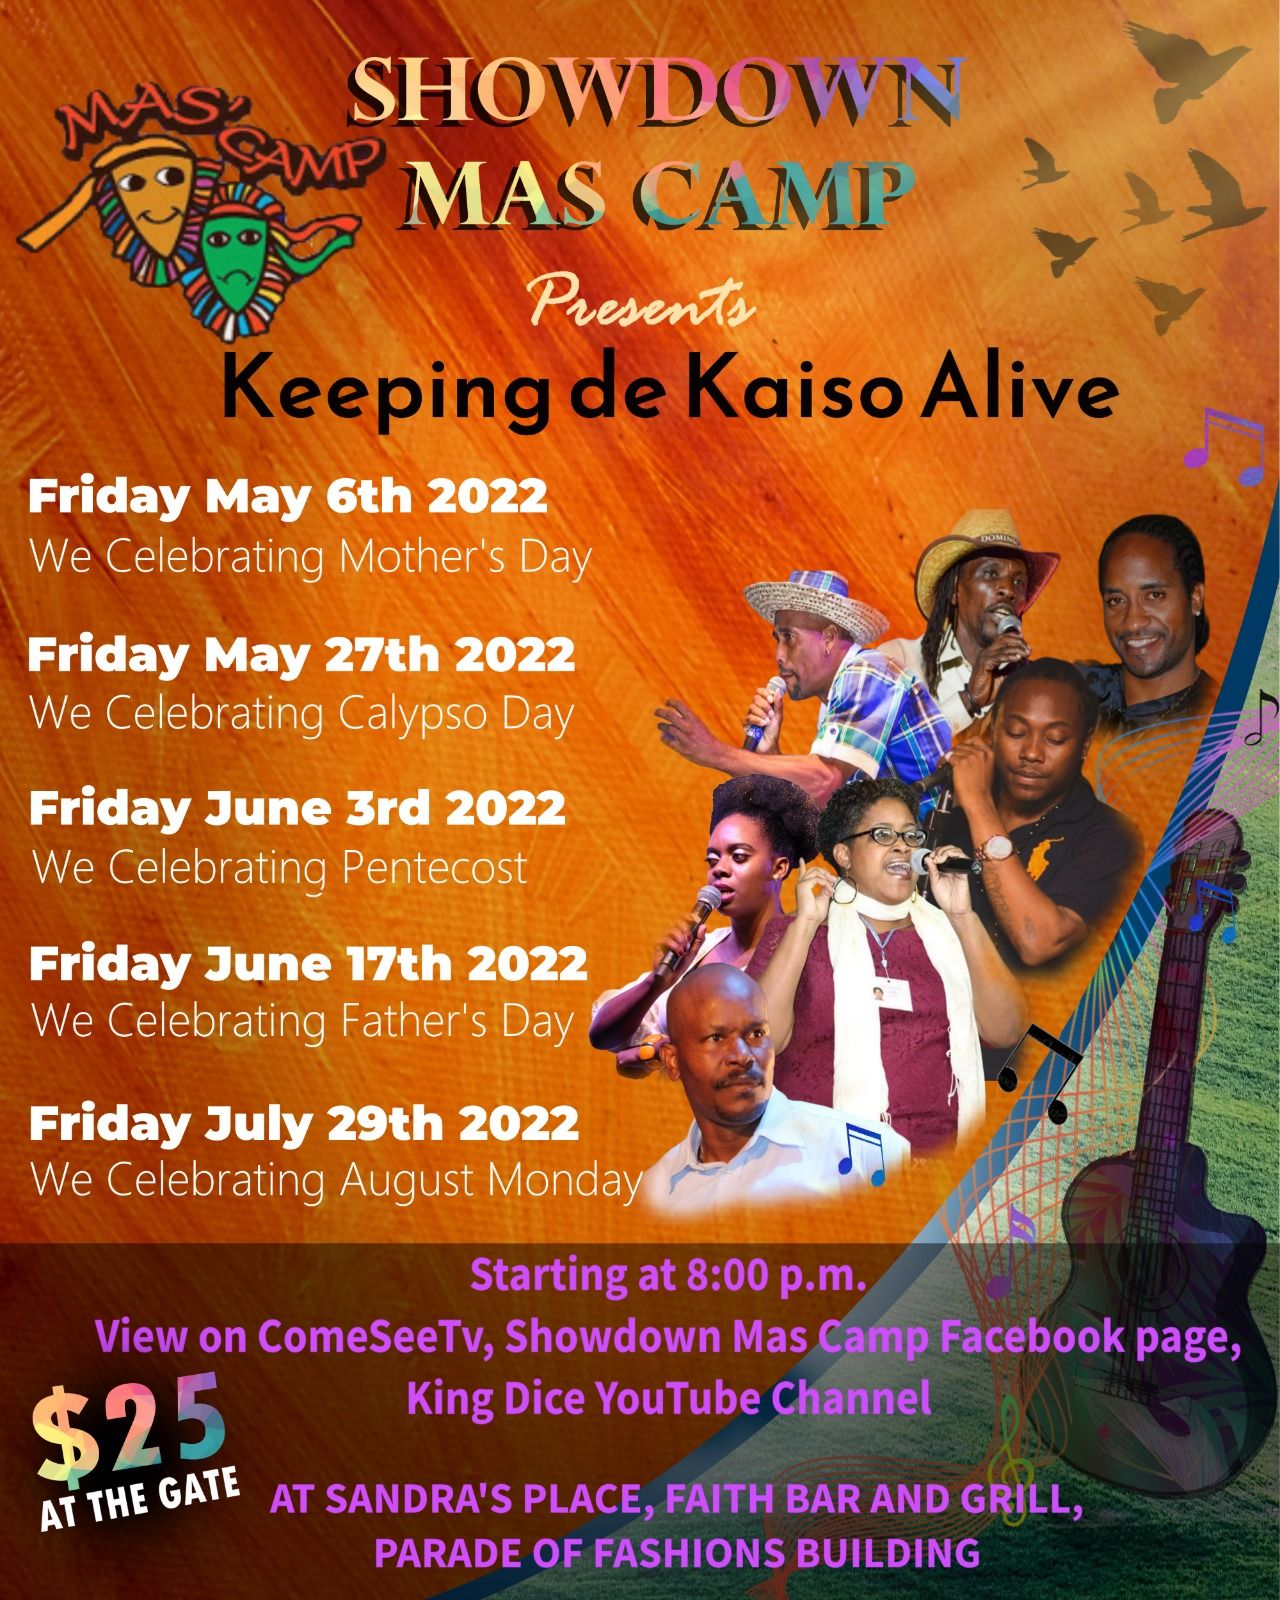 Showdown Mas Camp presents Keeping de Kaiso Alive 2022